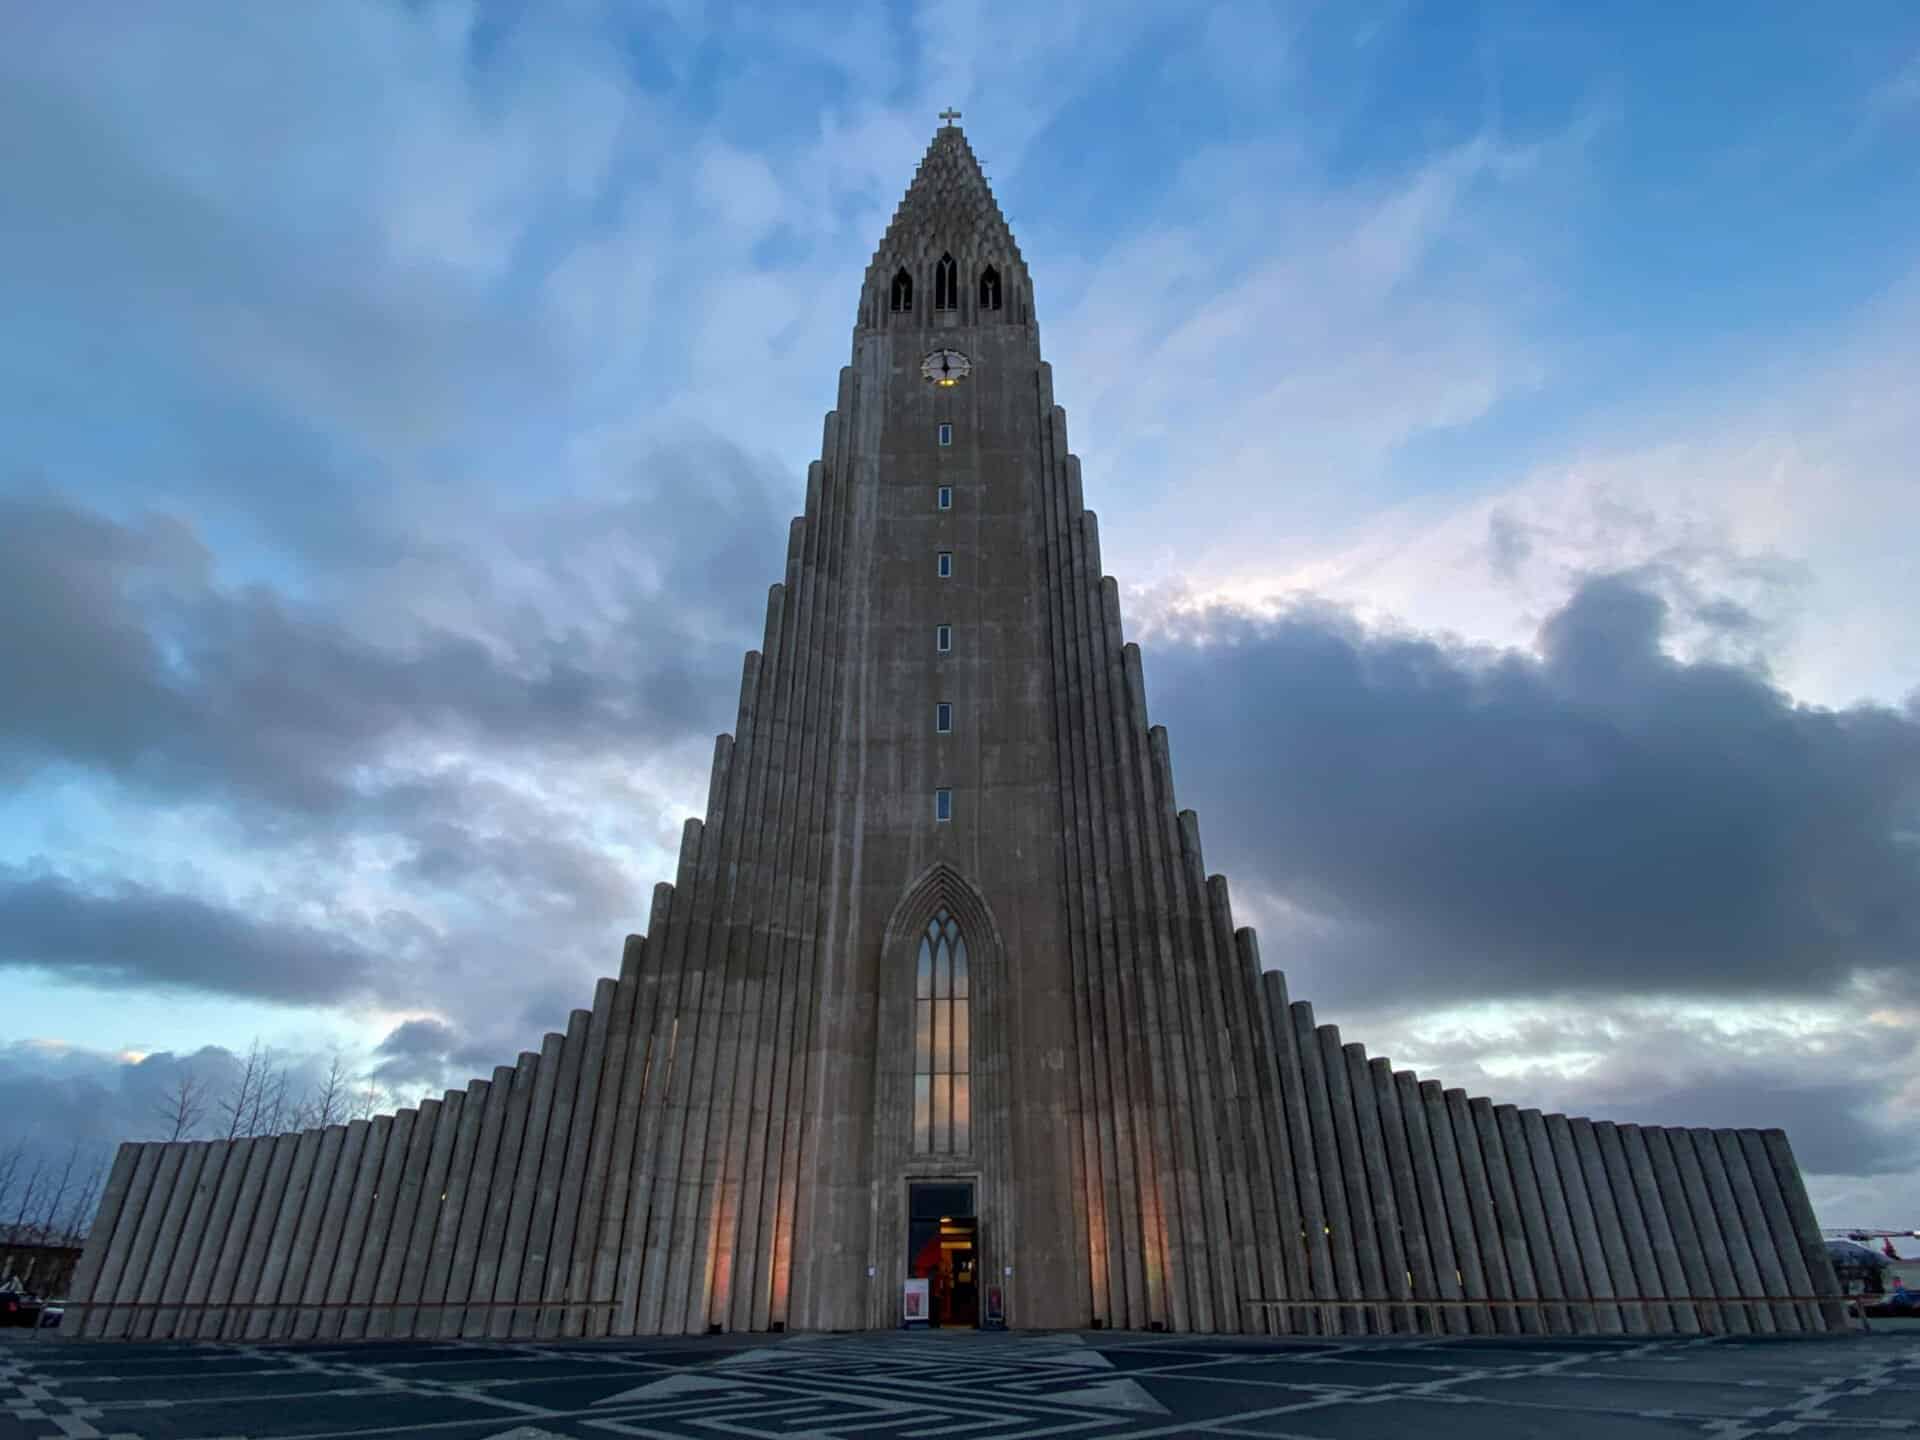 Čo vidieť v Reykjavíku / things to see in reykjavik